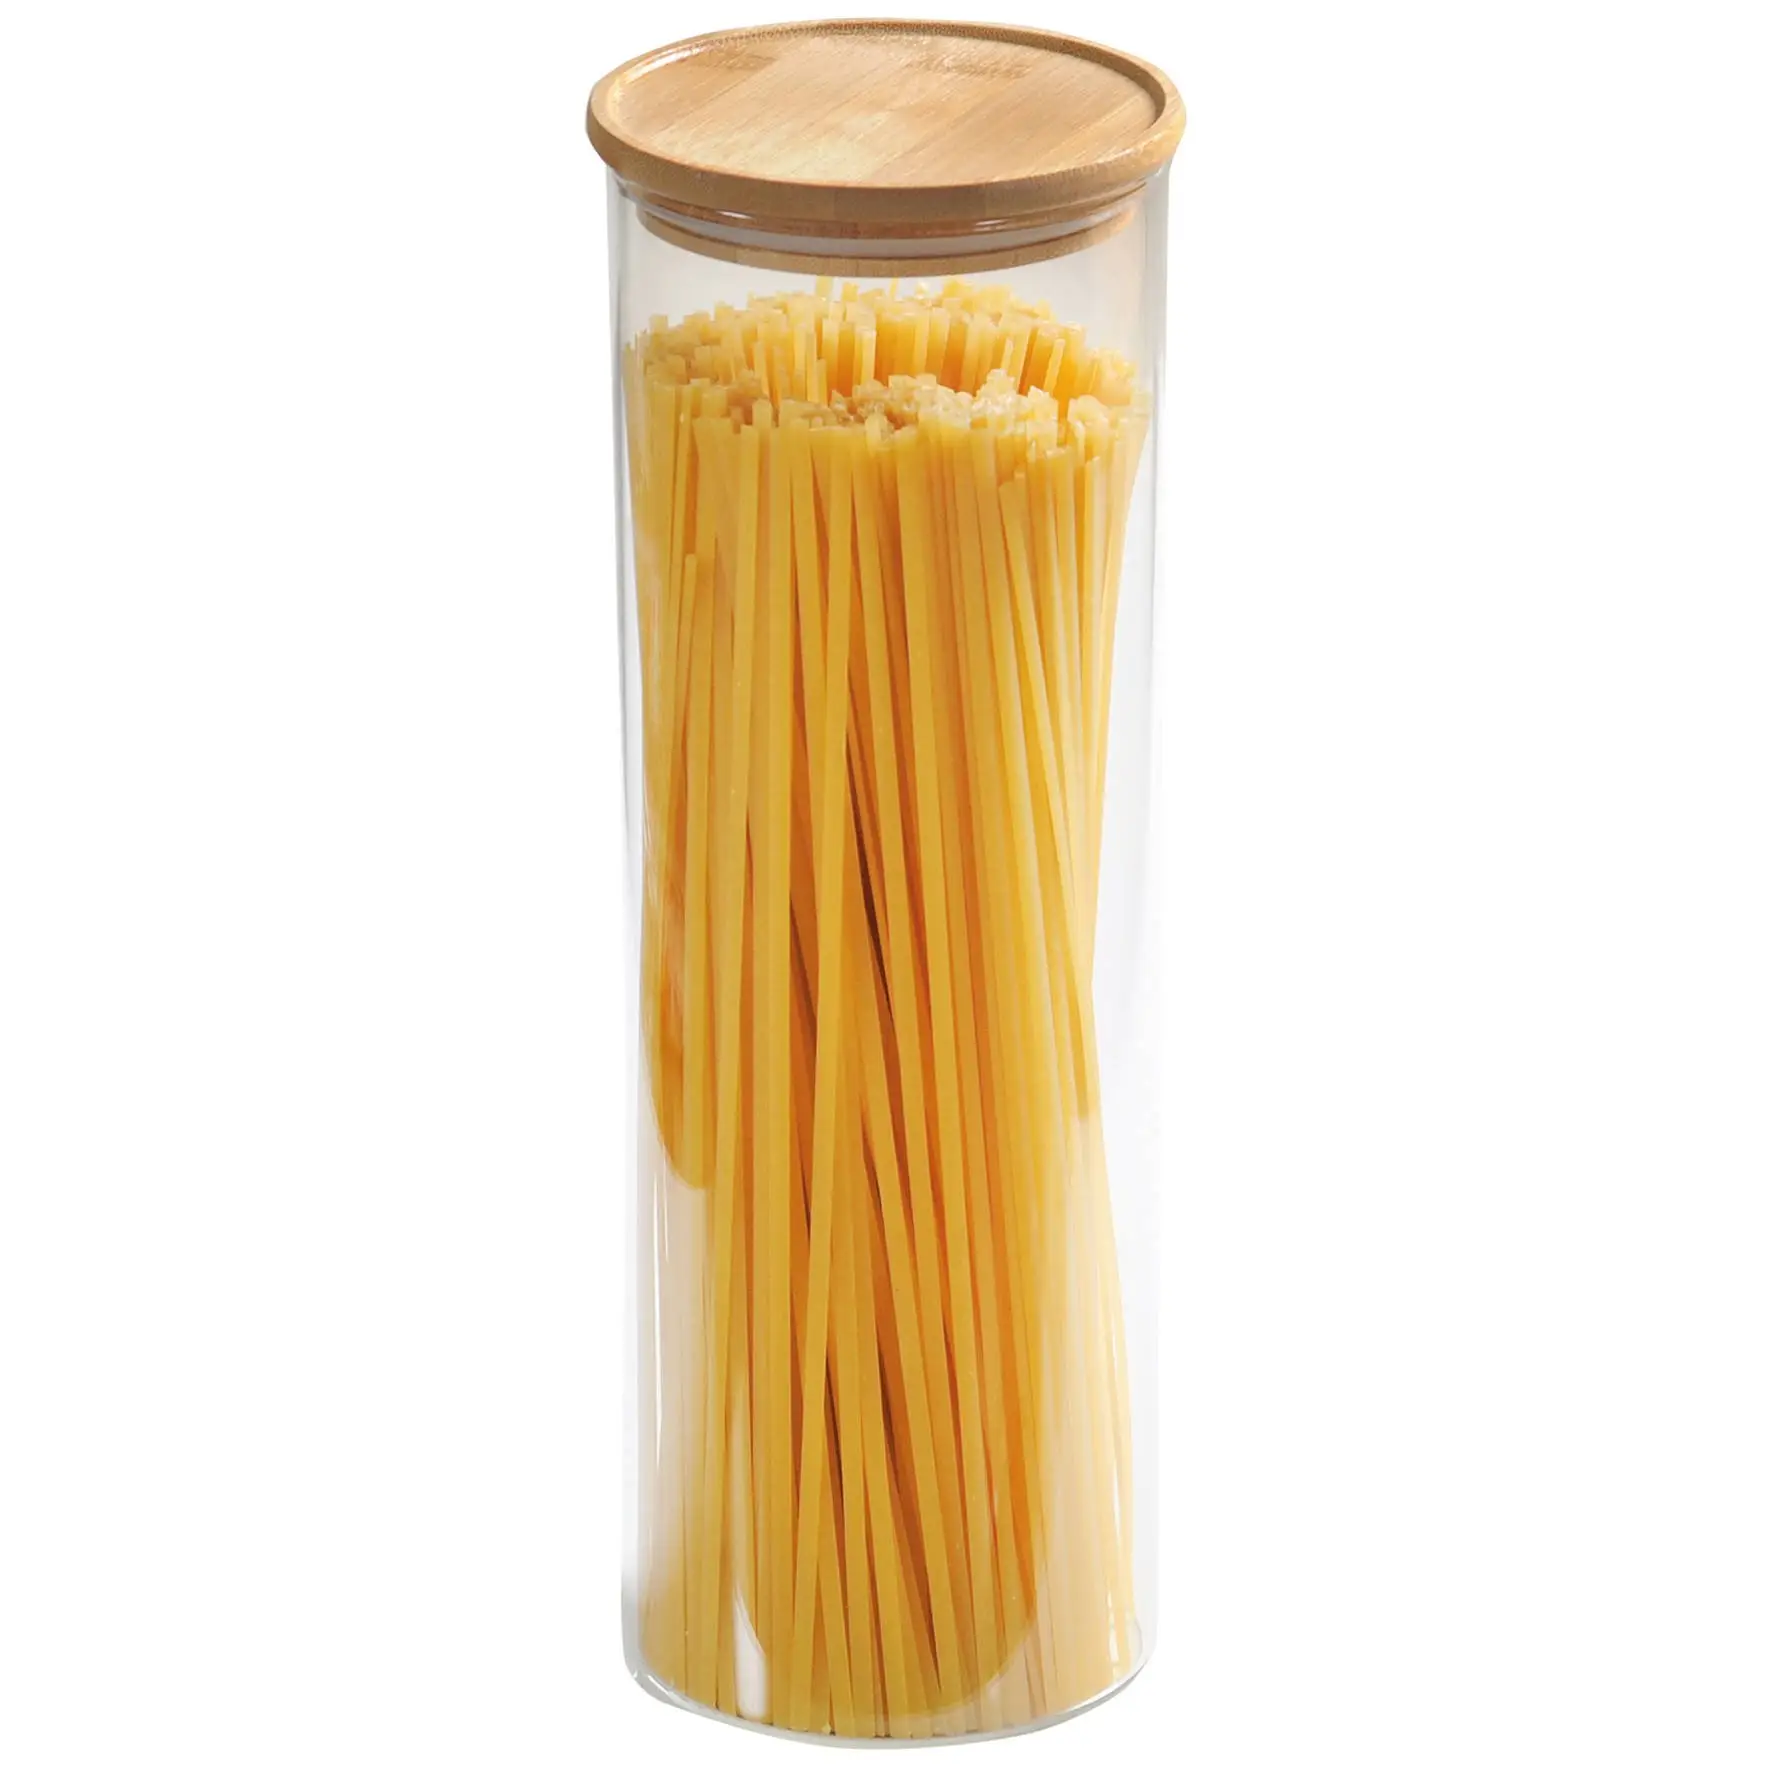 1,8 Spaghetti, f眉r Glasbeh盲lter L